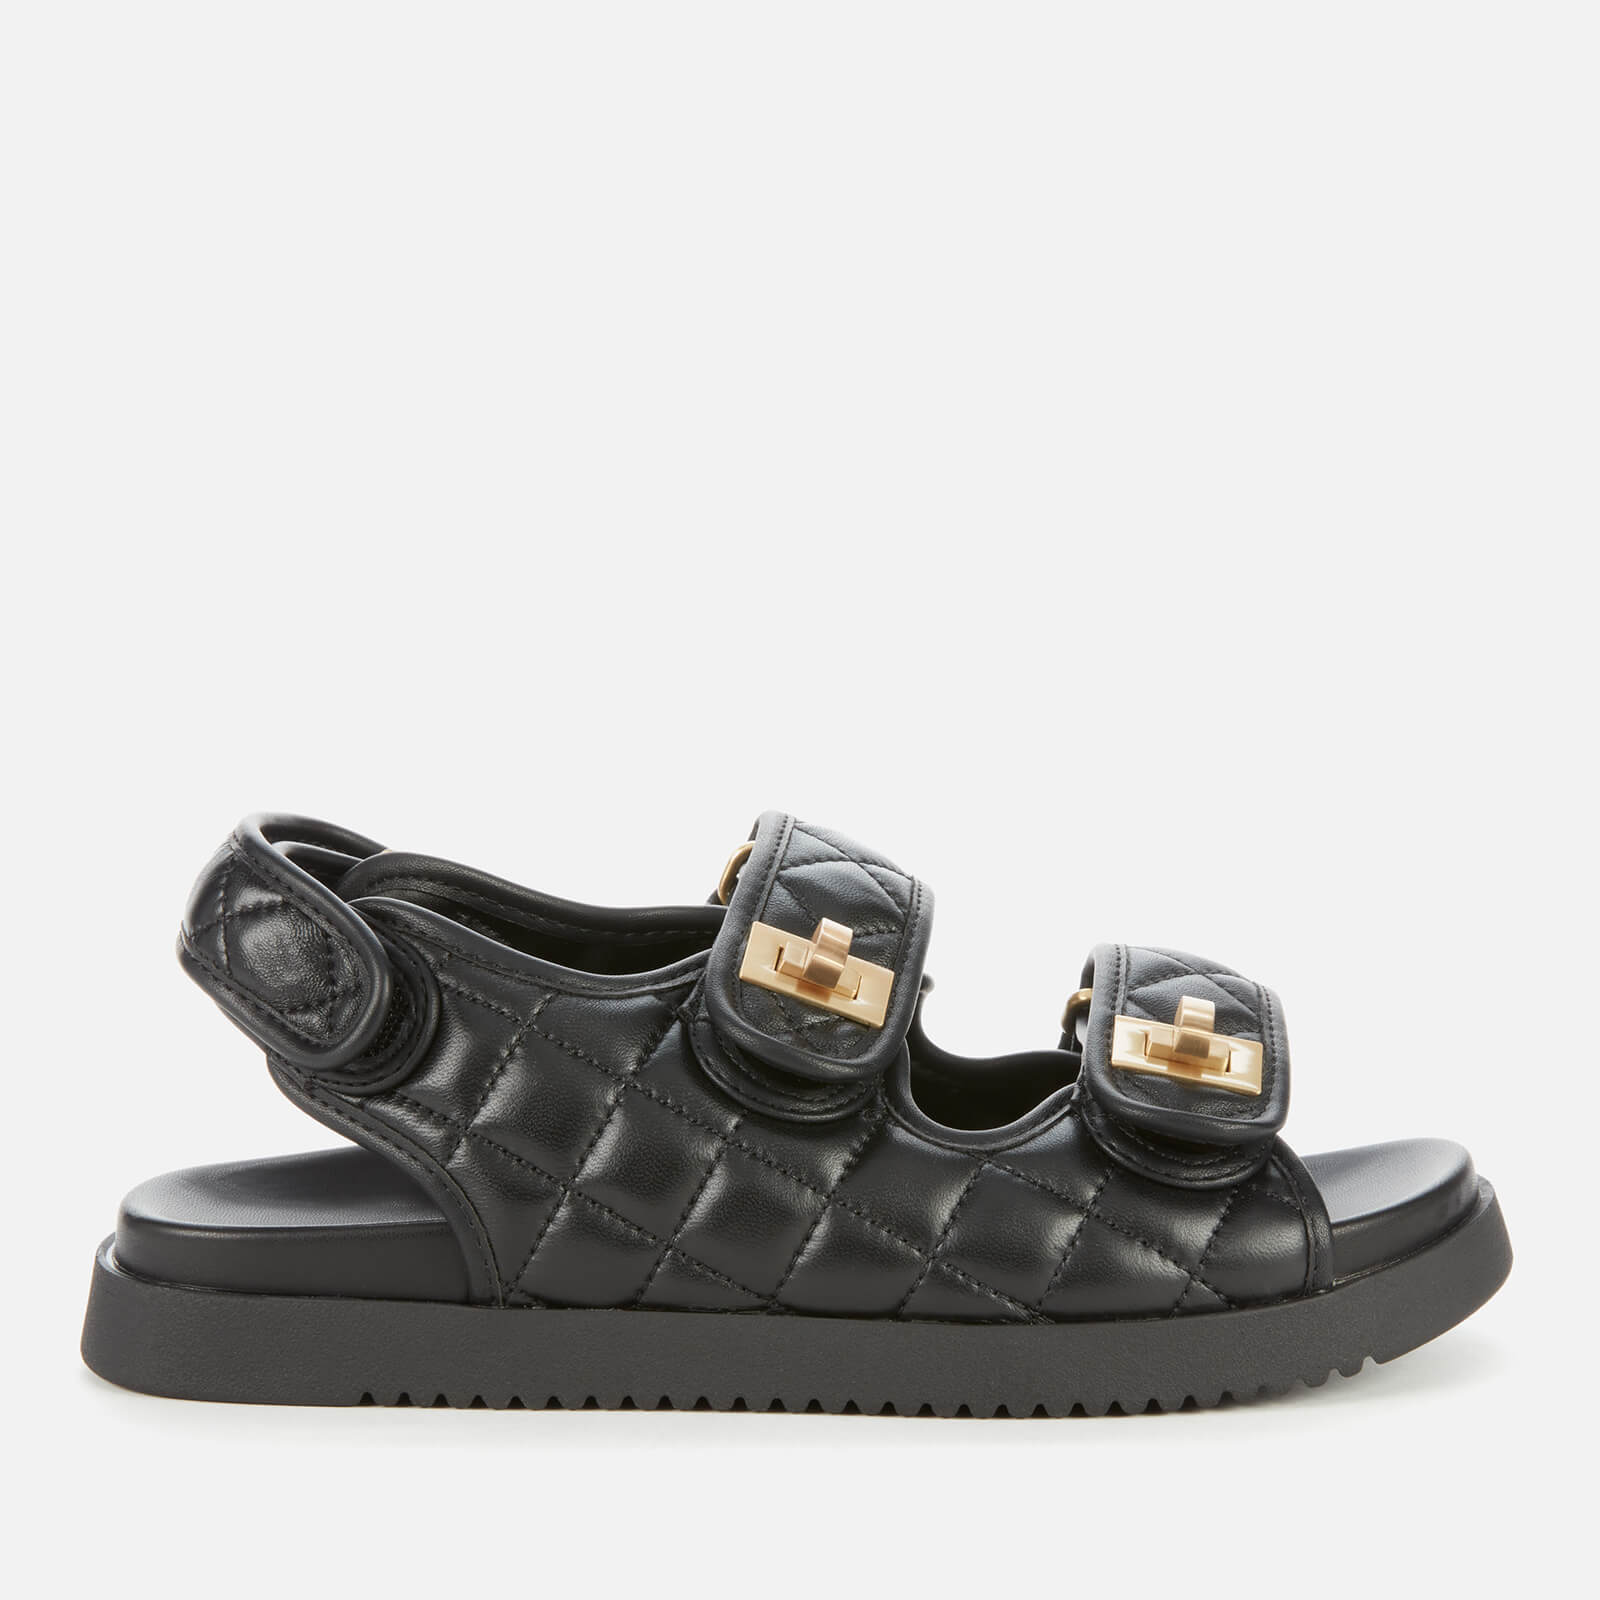 Dune Women’s Lockstock Leather Double Strap Sandals - Black